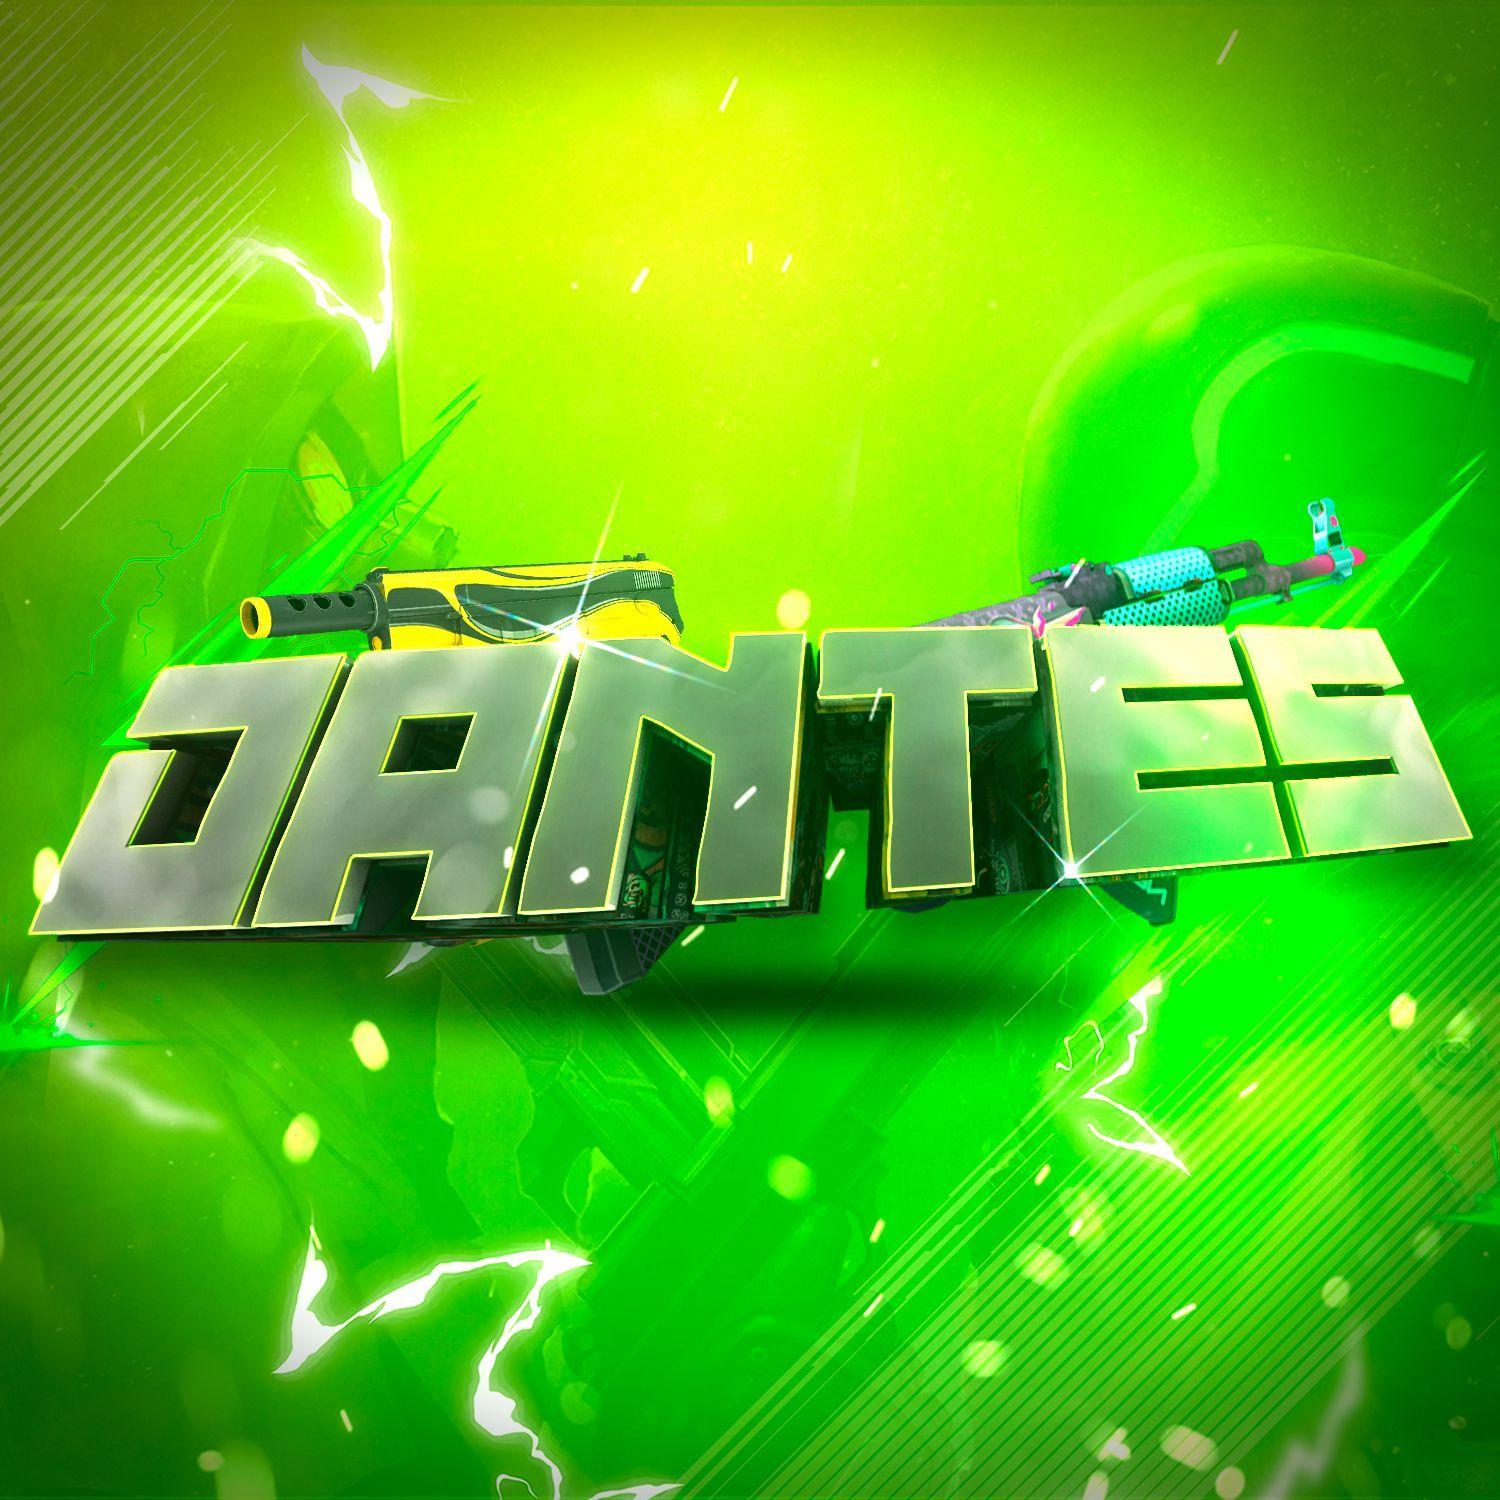 Player Dante-s avatar